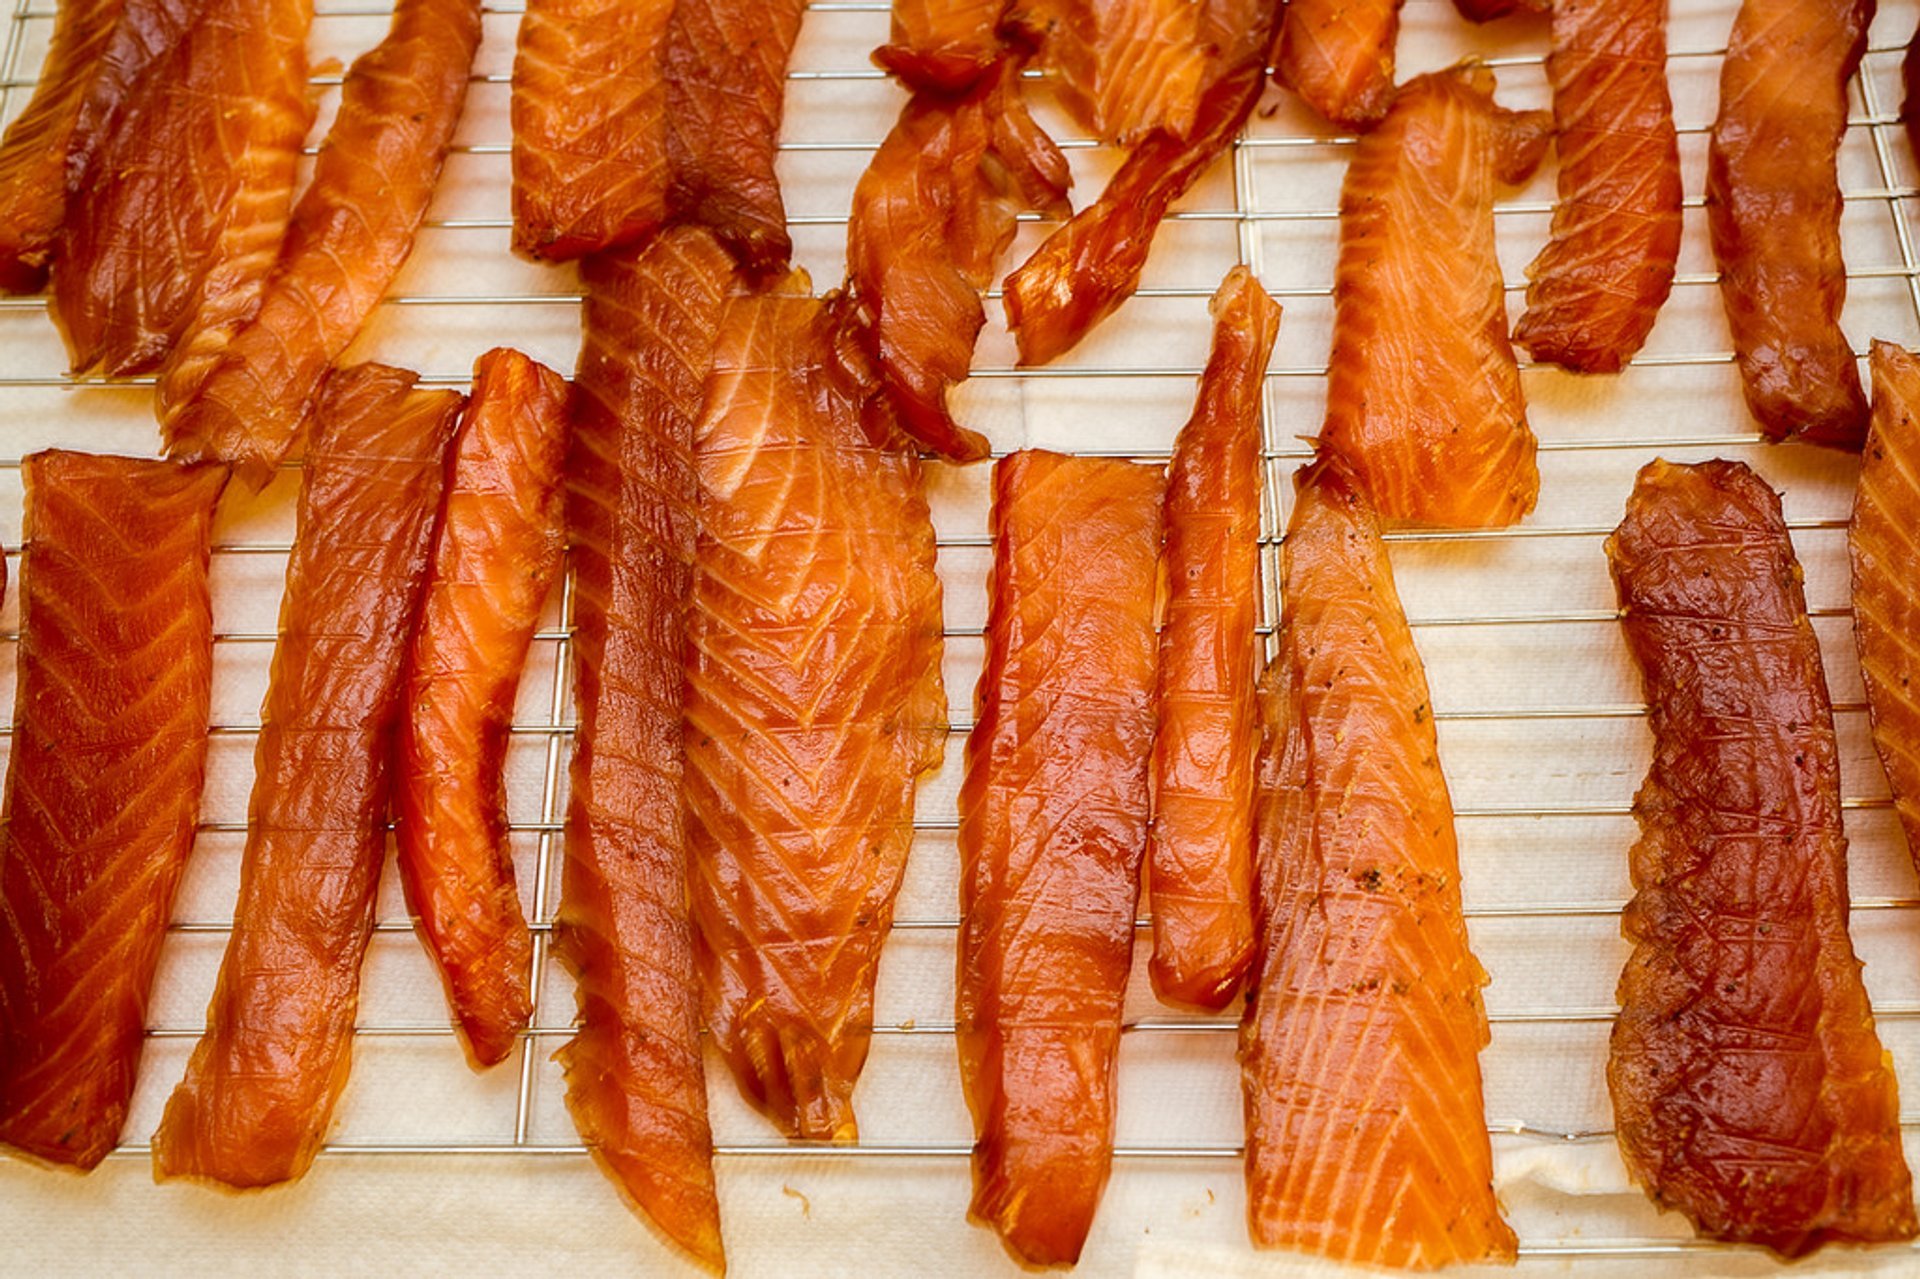 Cured Salmon Strips Season in Alaska 2020 - Rove.me